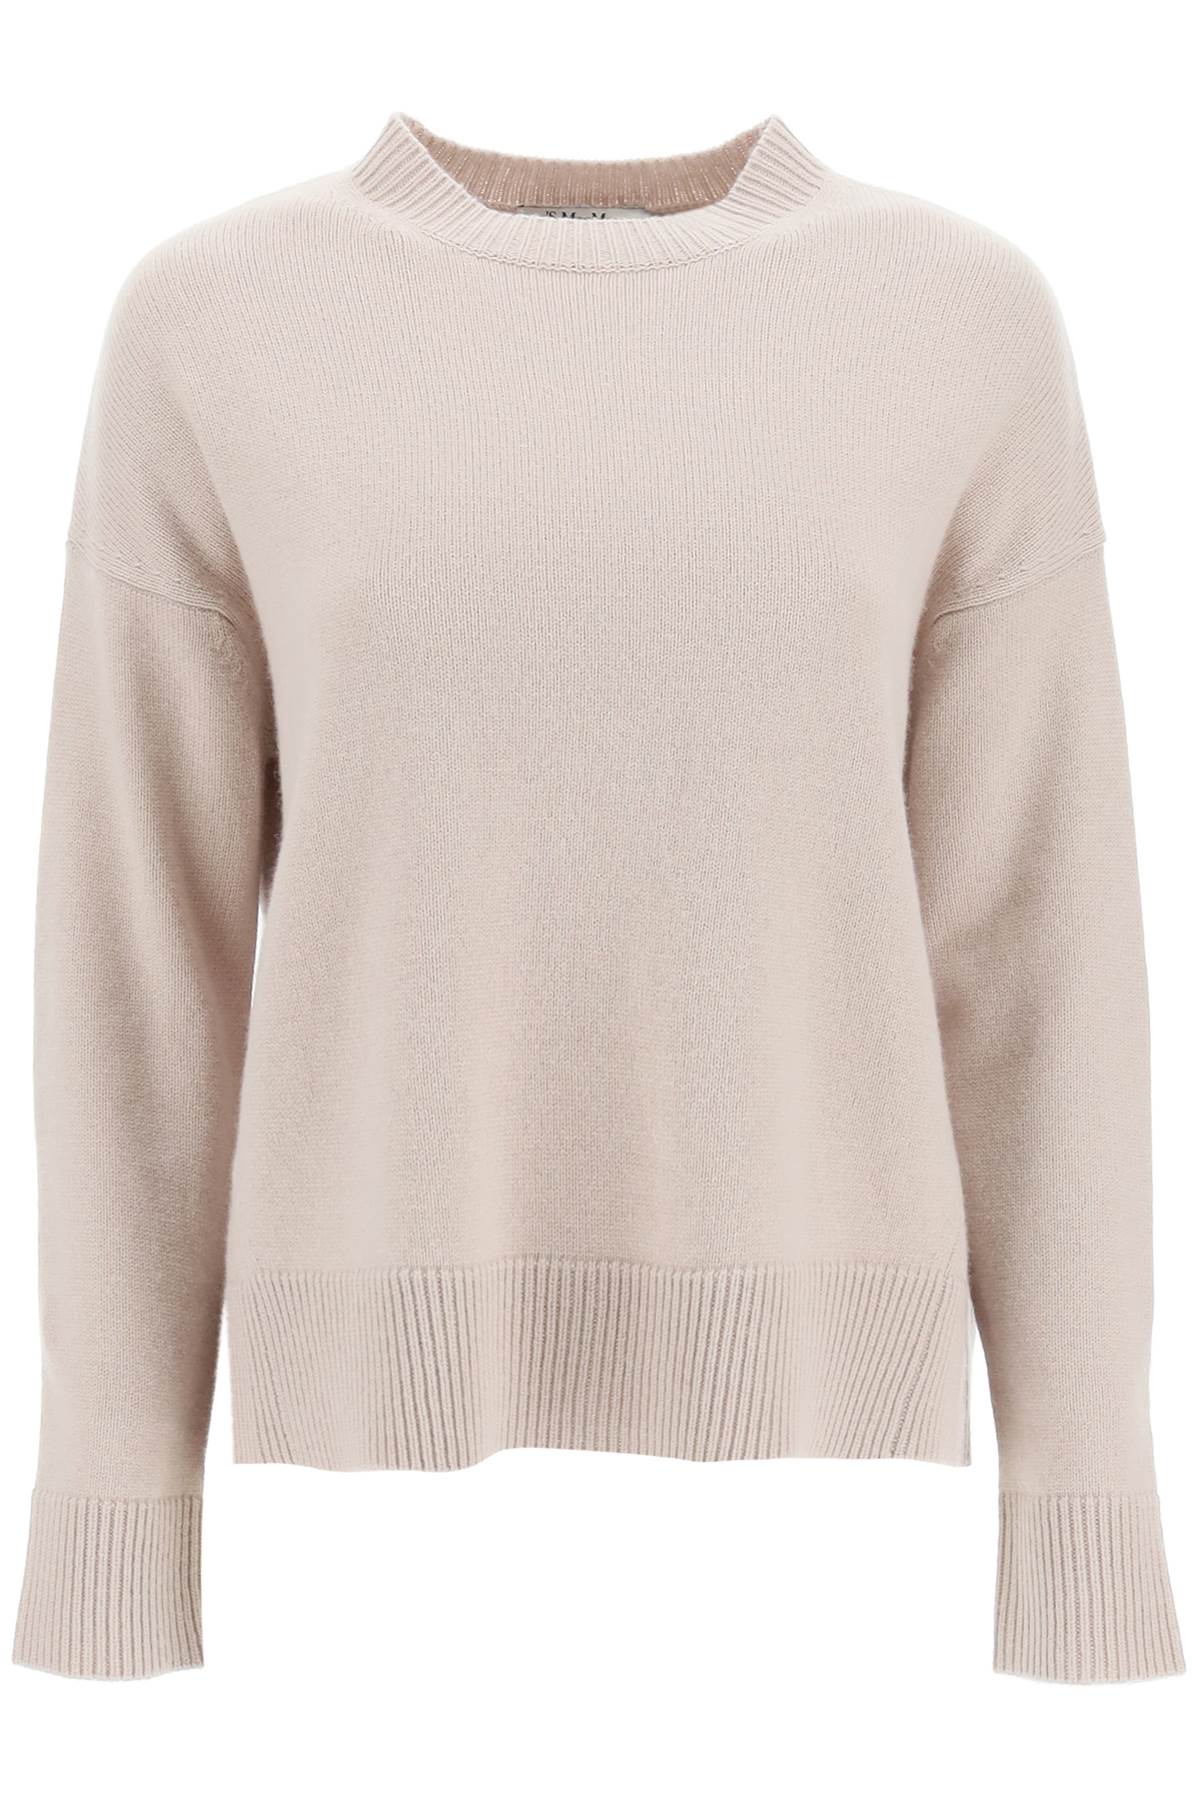 's Max Mara 'venezia' Wool And Cashmere Sweater In Neutro